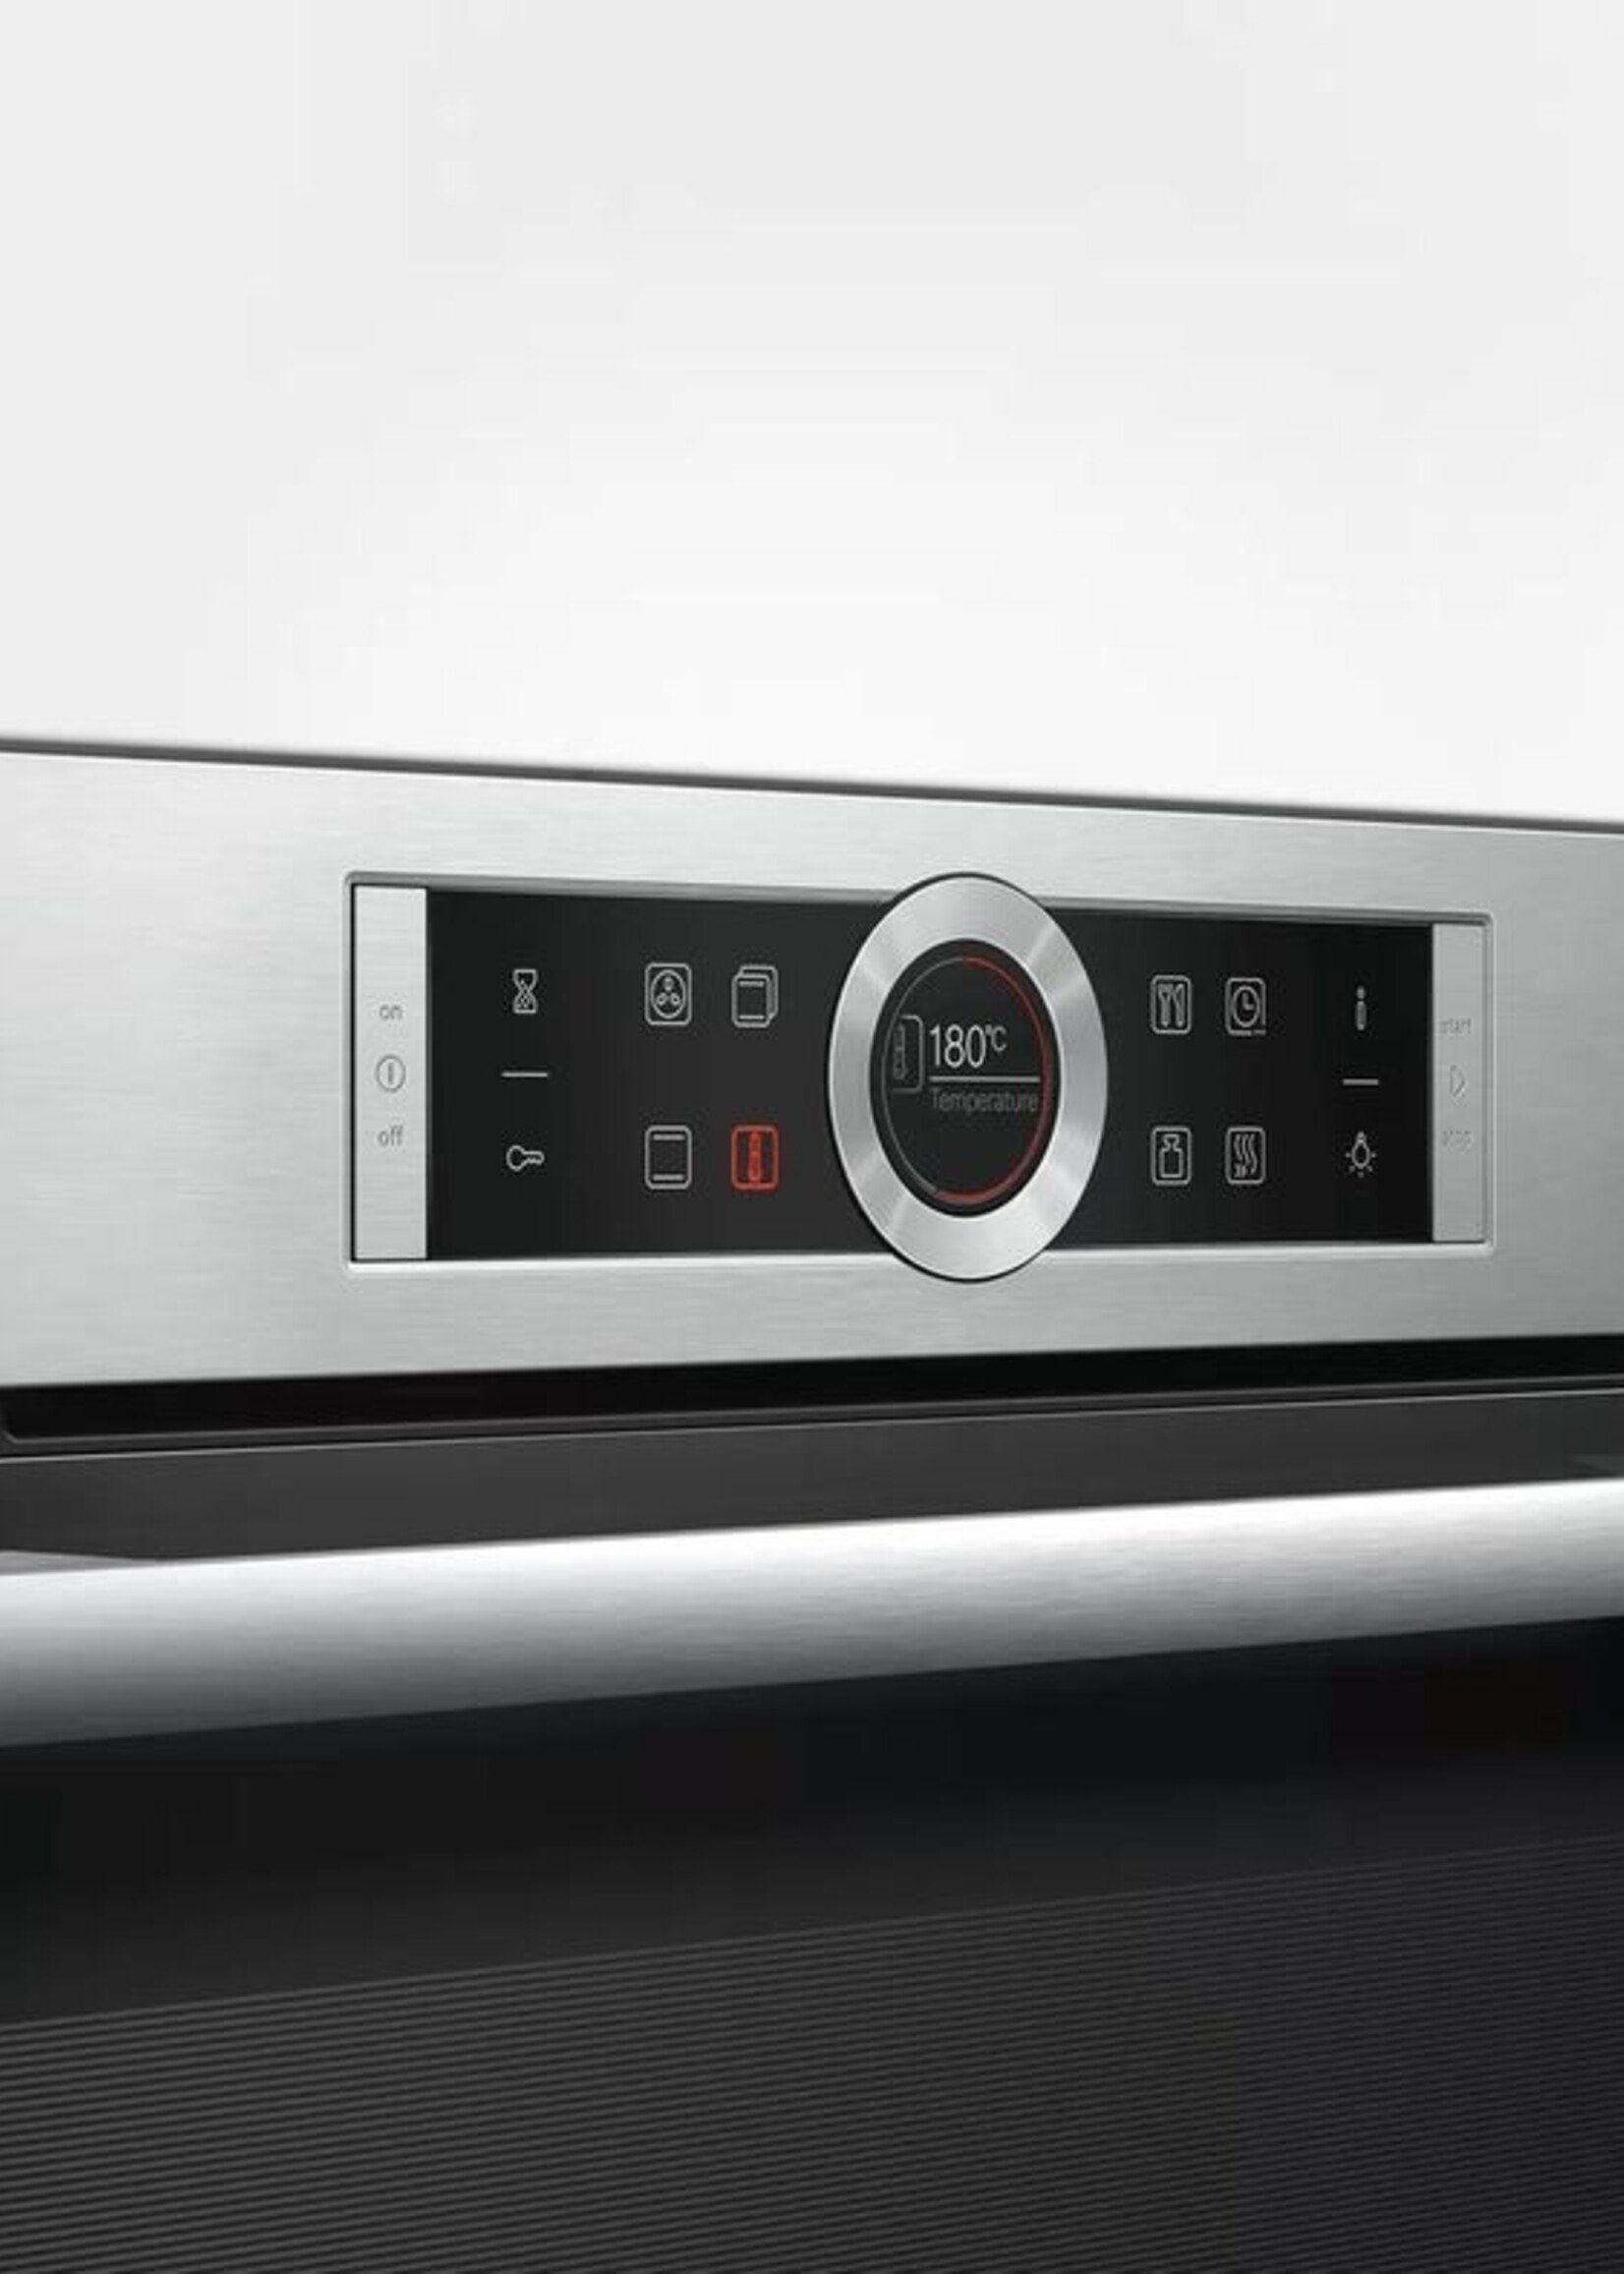 Bosch CBG635BS3 - Inbouw oven